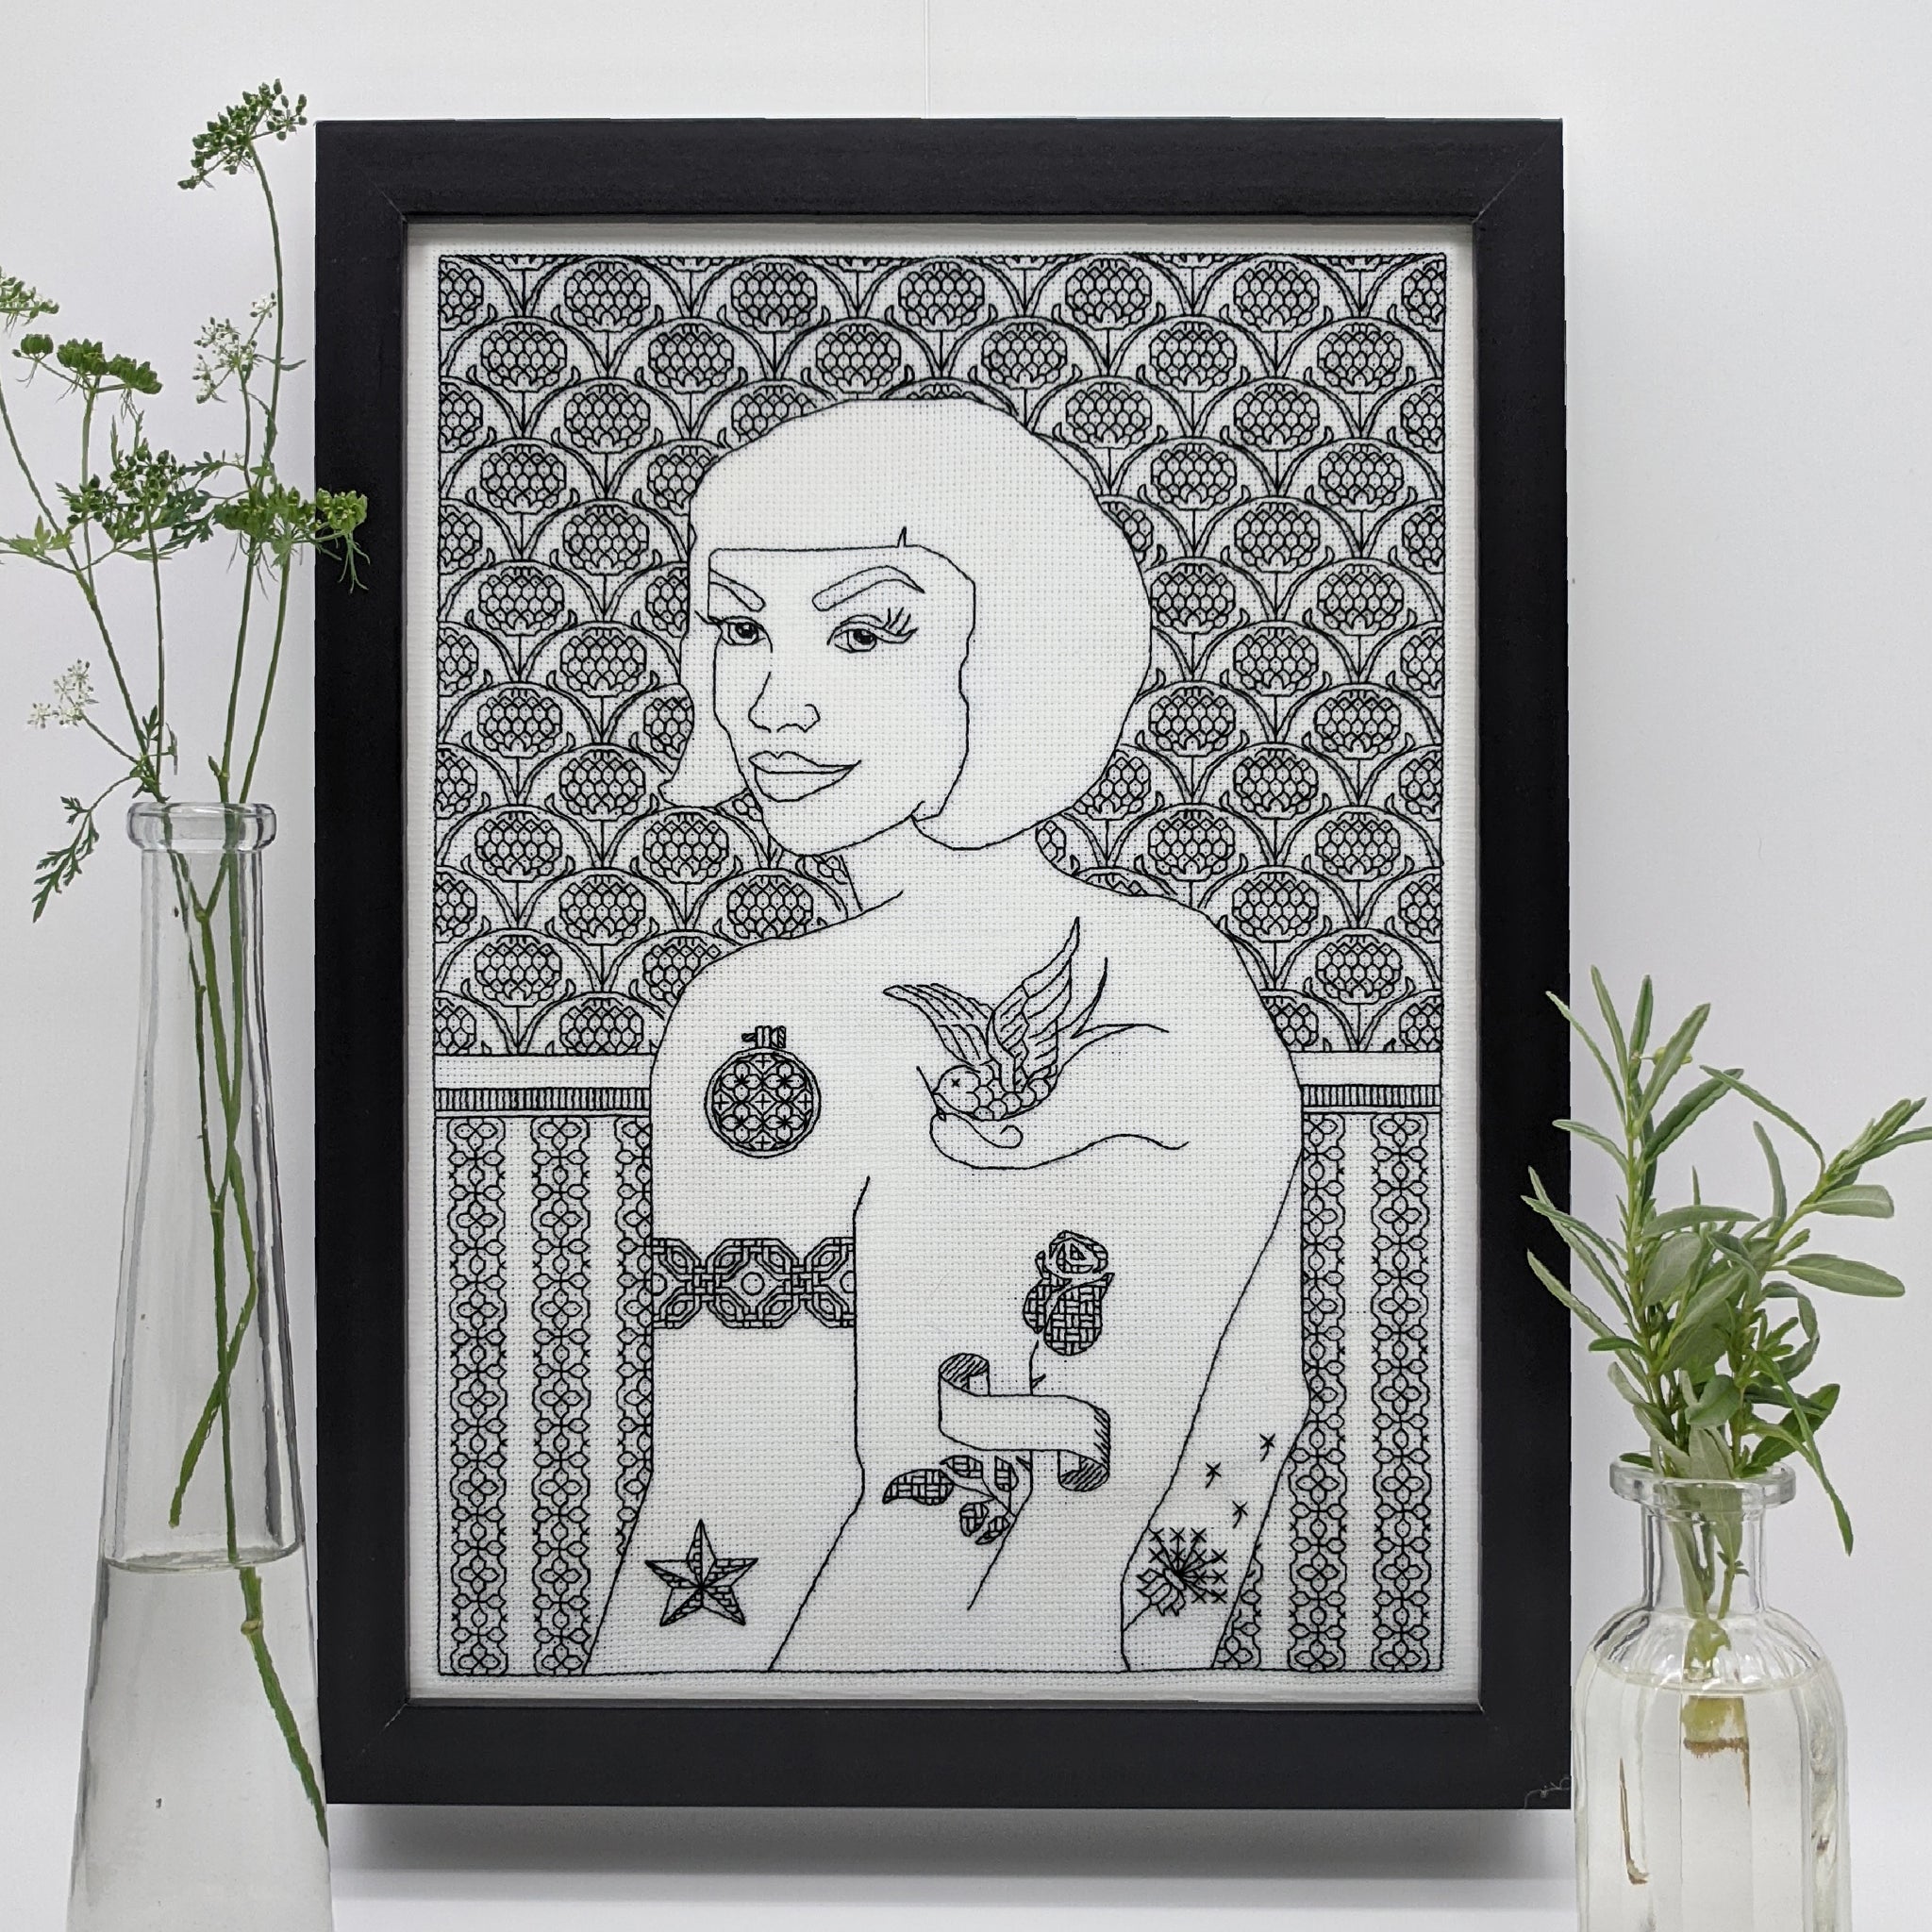 Blackwork embroidery tattooed woman